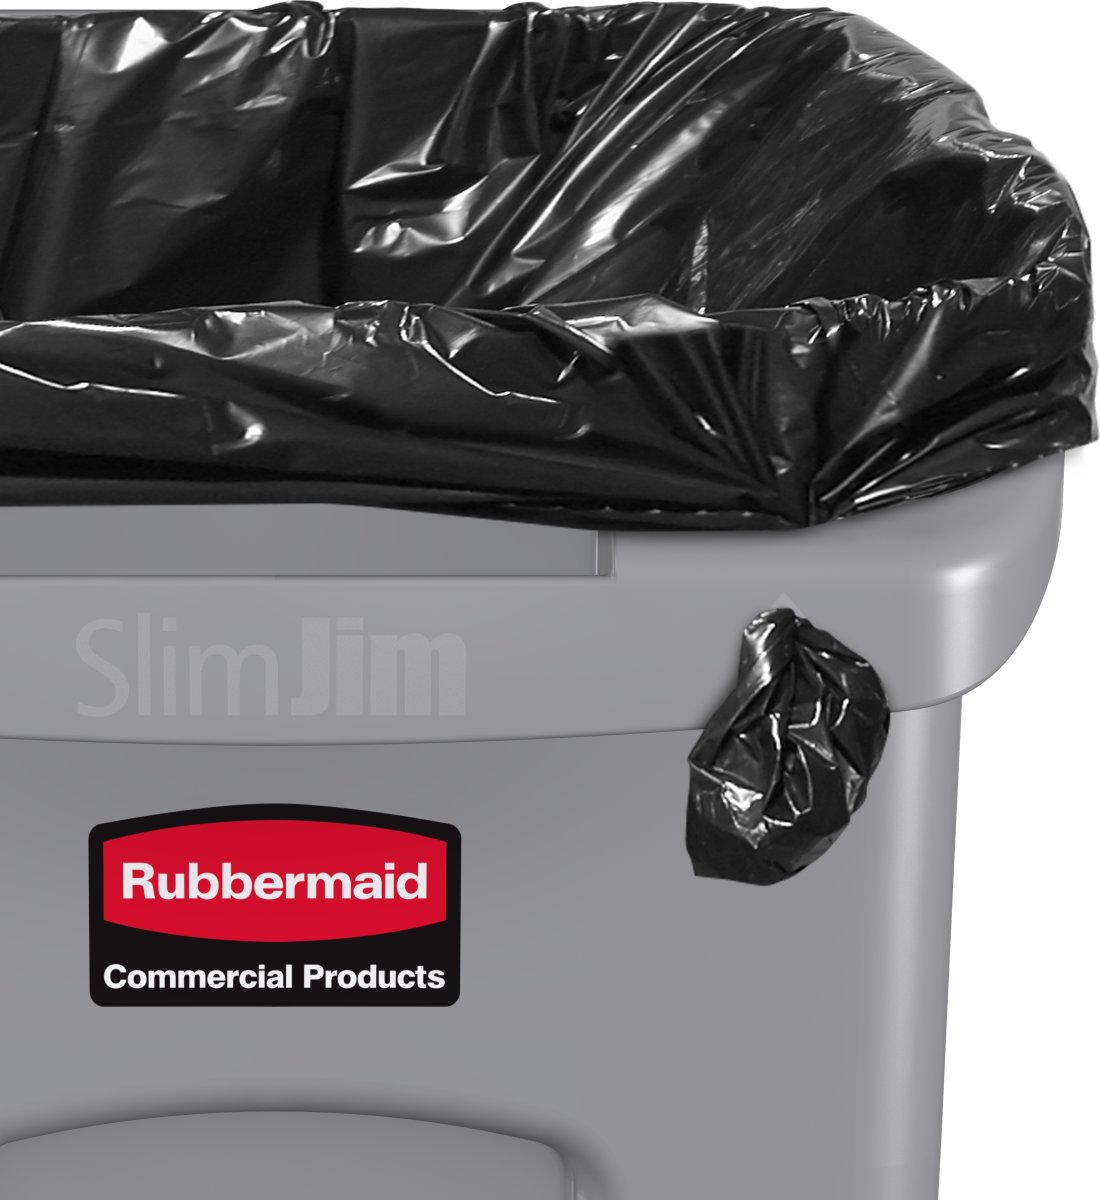 Rubbermaid Slim Jim affaldsbeholder, 87 liter, Grå